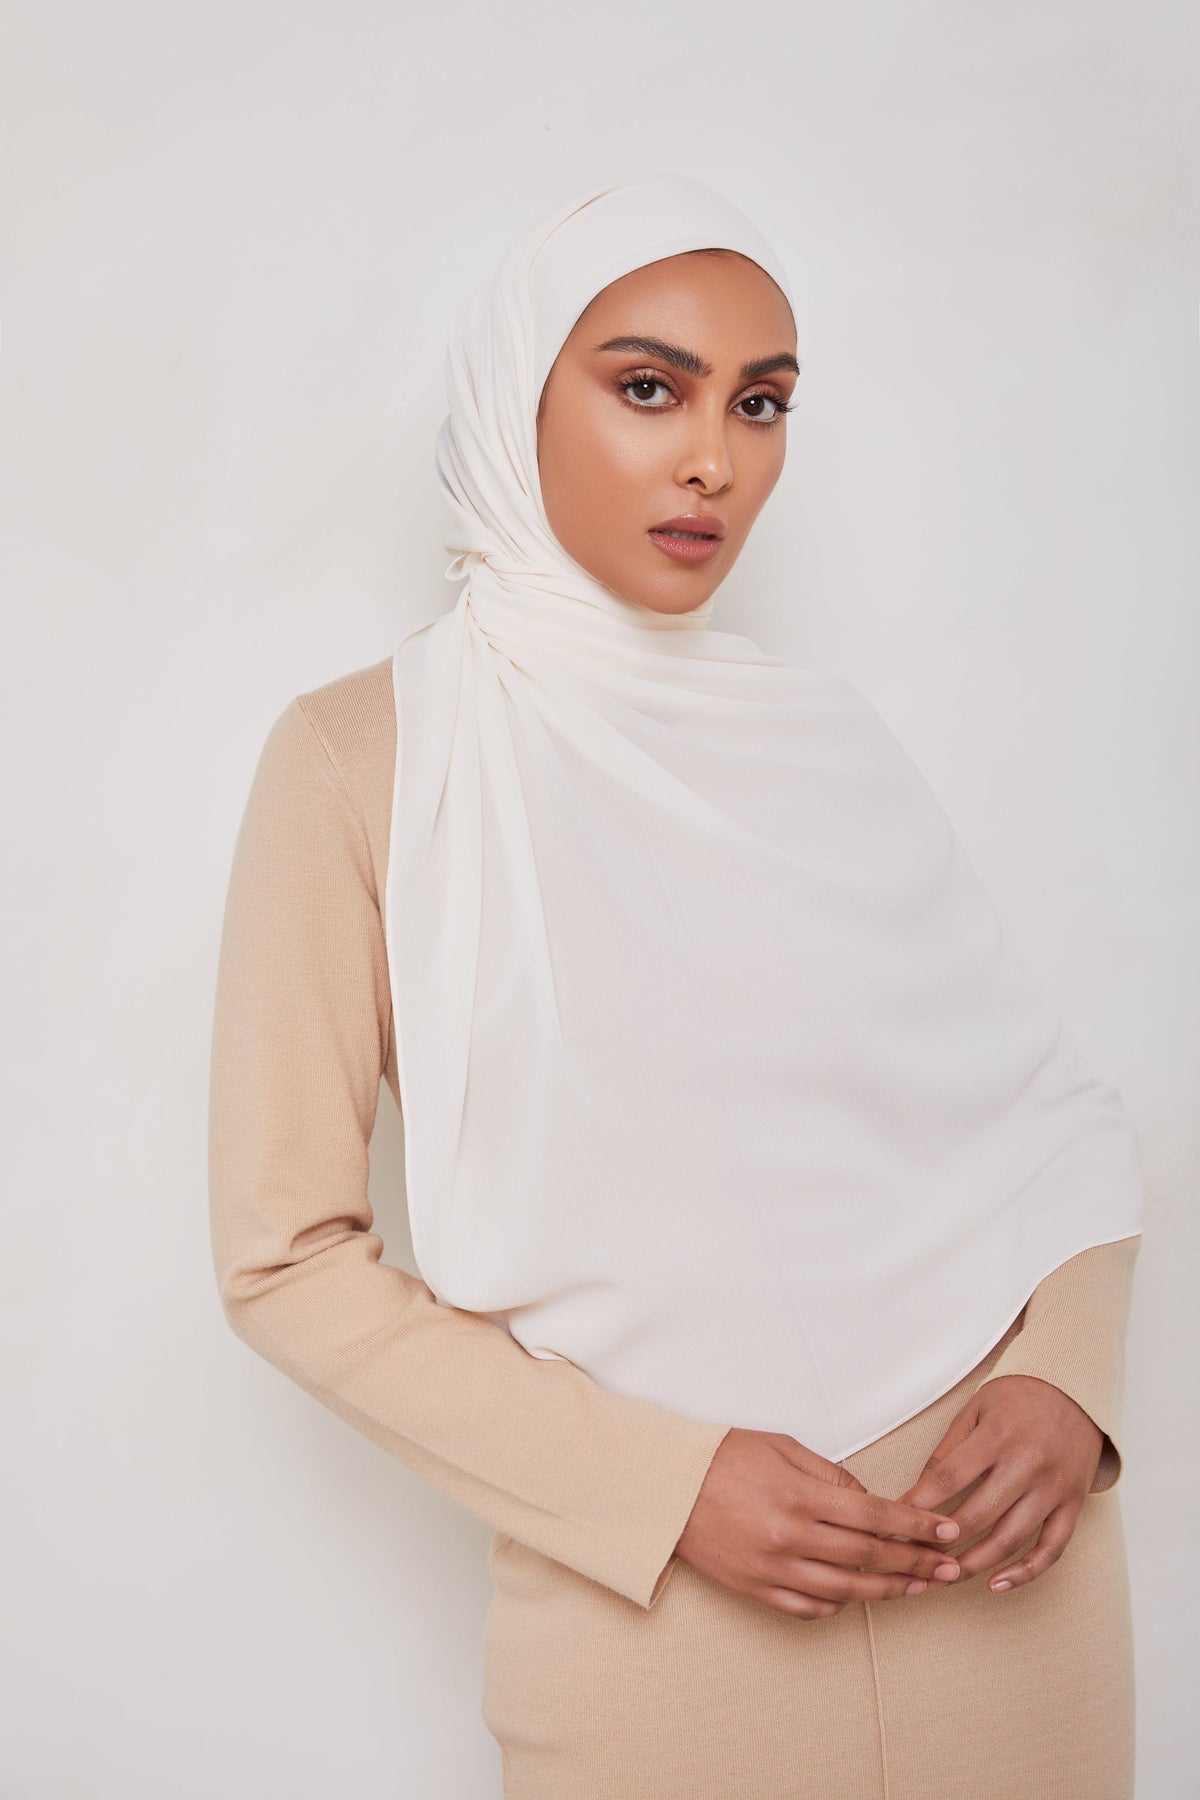 TEXTURE Everyday Chiffon Hijab - Not White epschoolboard 